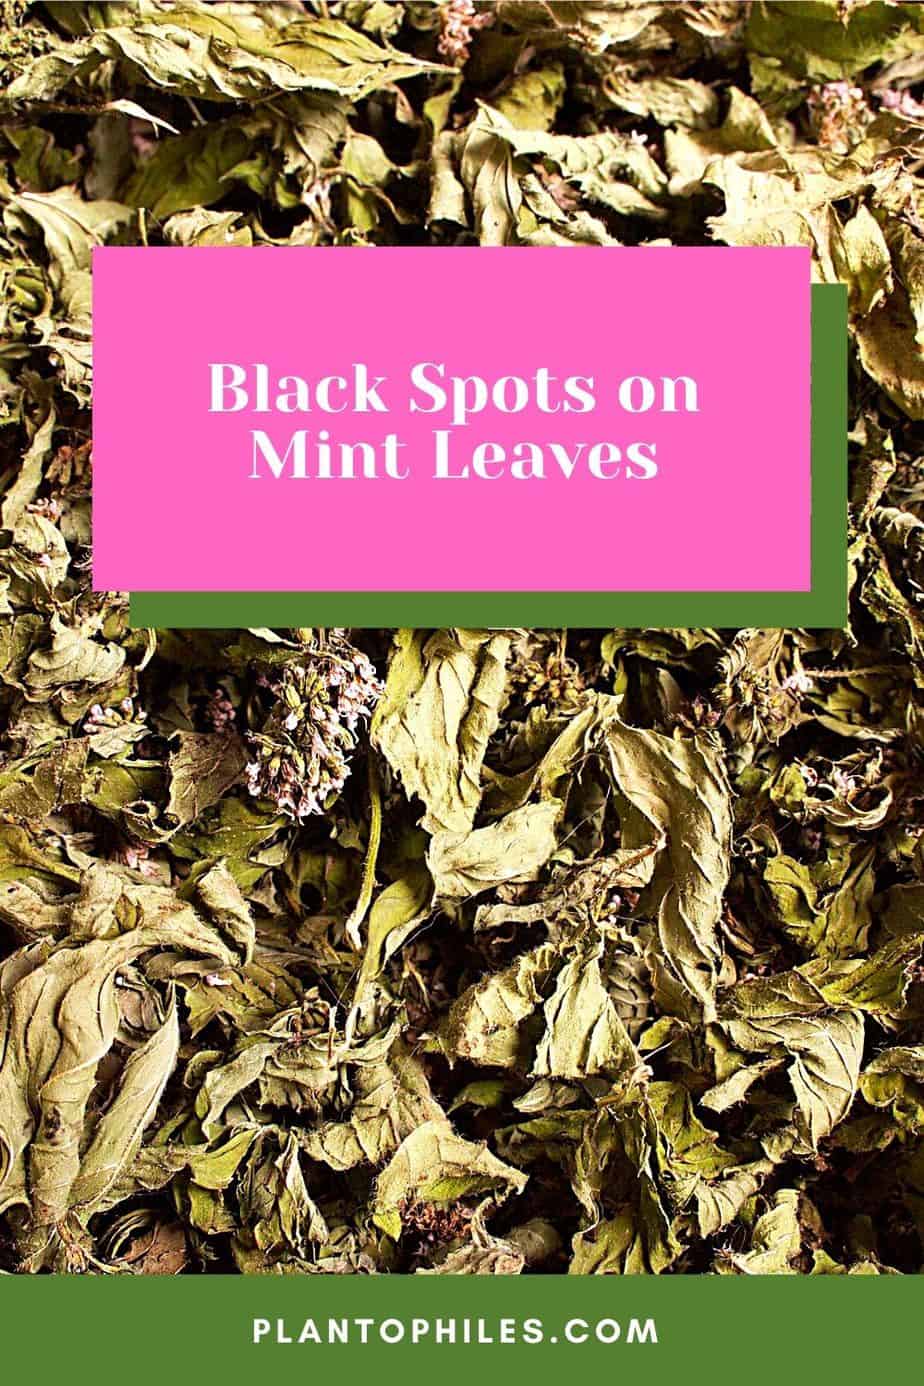 Black Spots on Mint Leaves